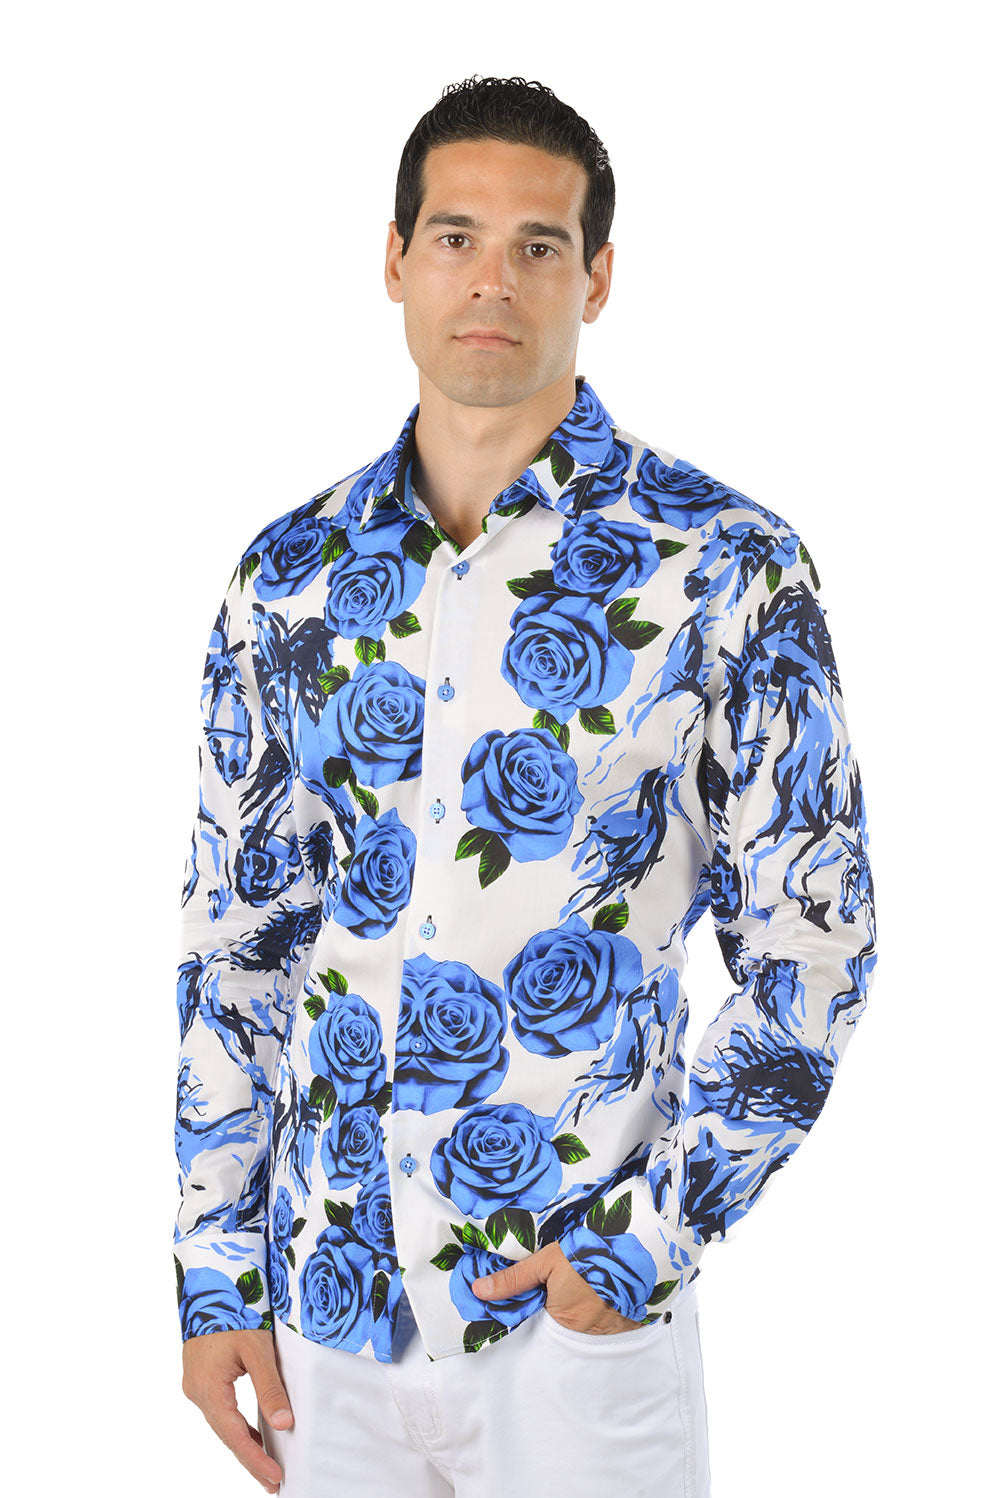 Barabas Men's Wild Horses Floral Button Down Long Sleeve Shirt SP21 Royal Blue